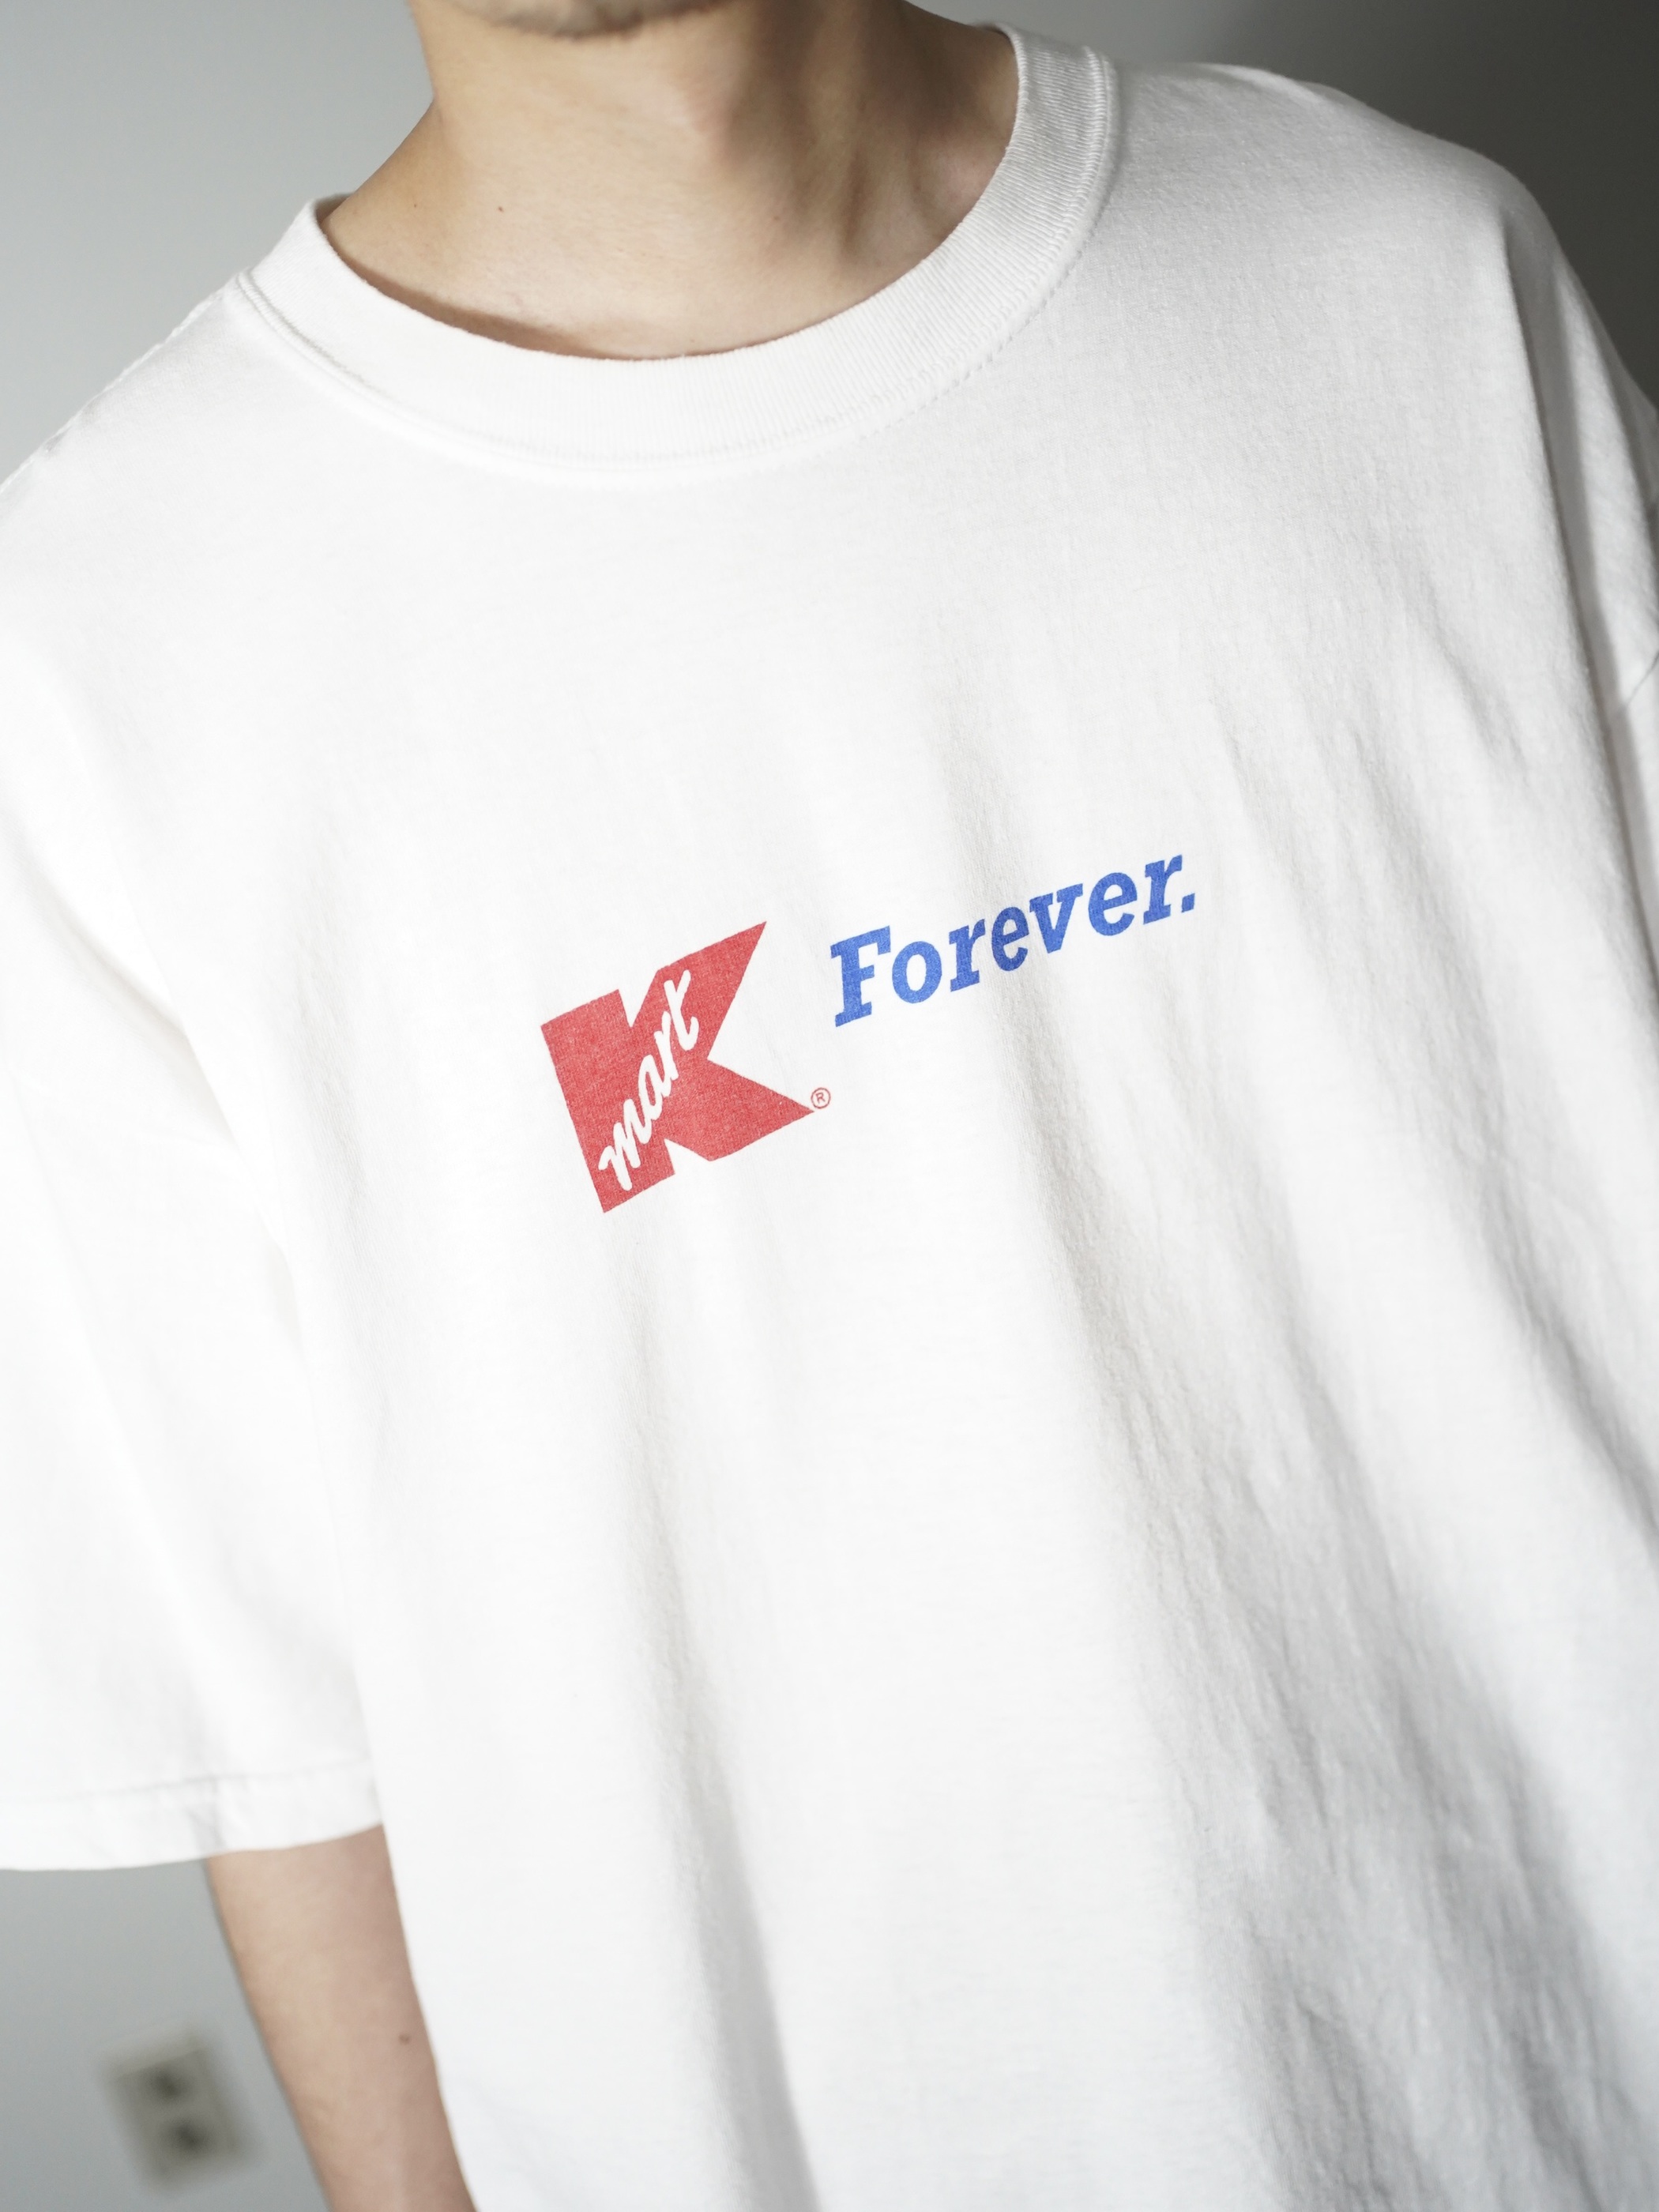 00's "Kmart" 両面Print T-shirts